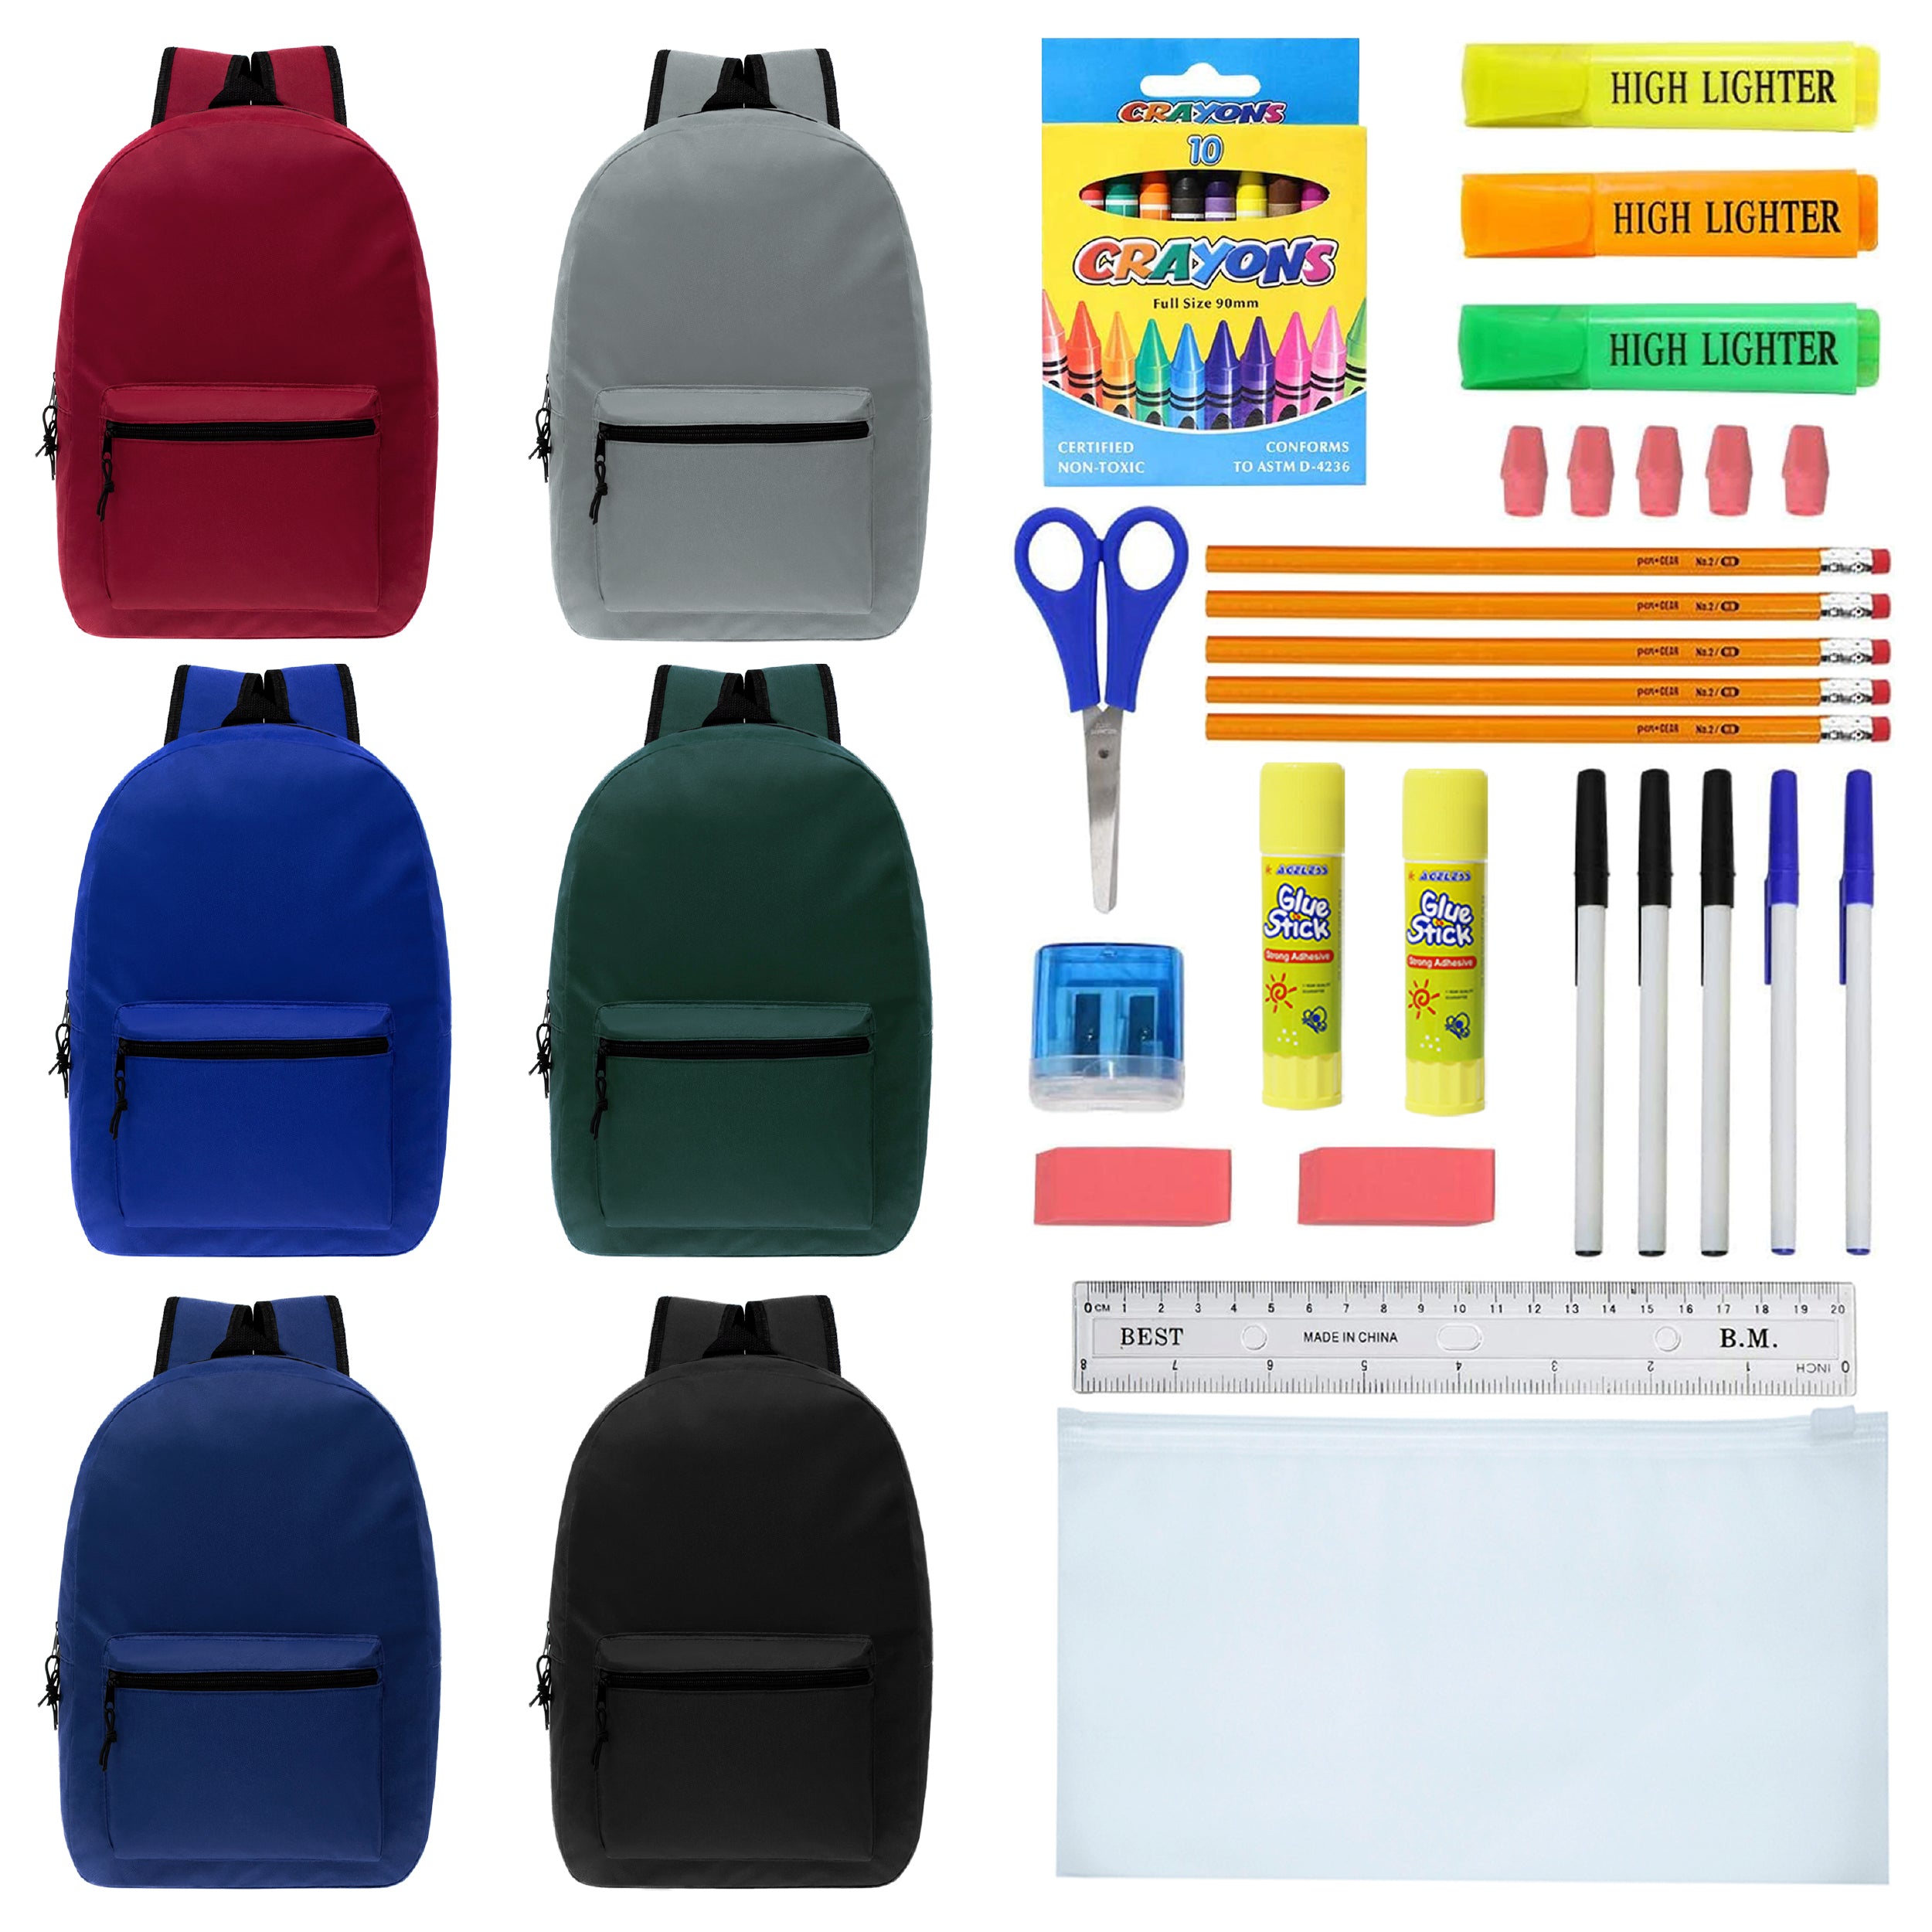 12 Pack Assorted Colors + School Backpacks for Kids Bulk School Supplies Kit Case Of 12